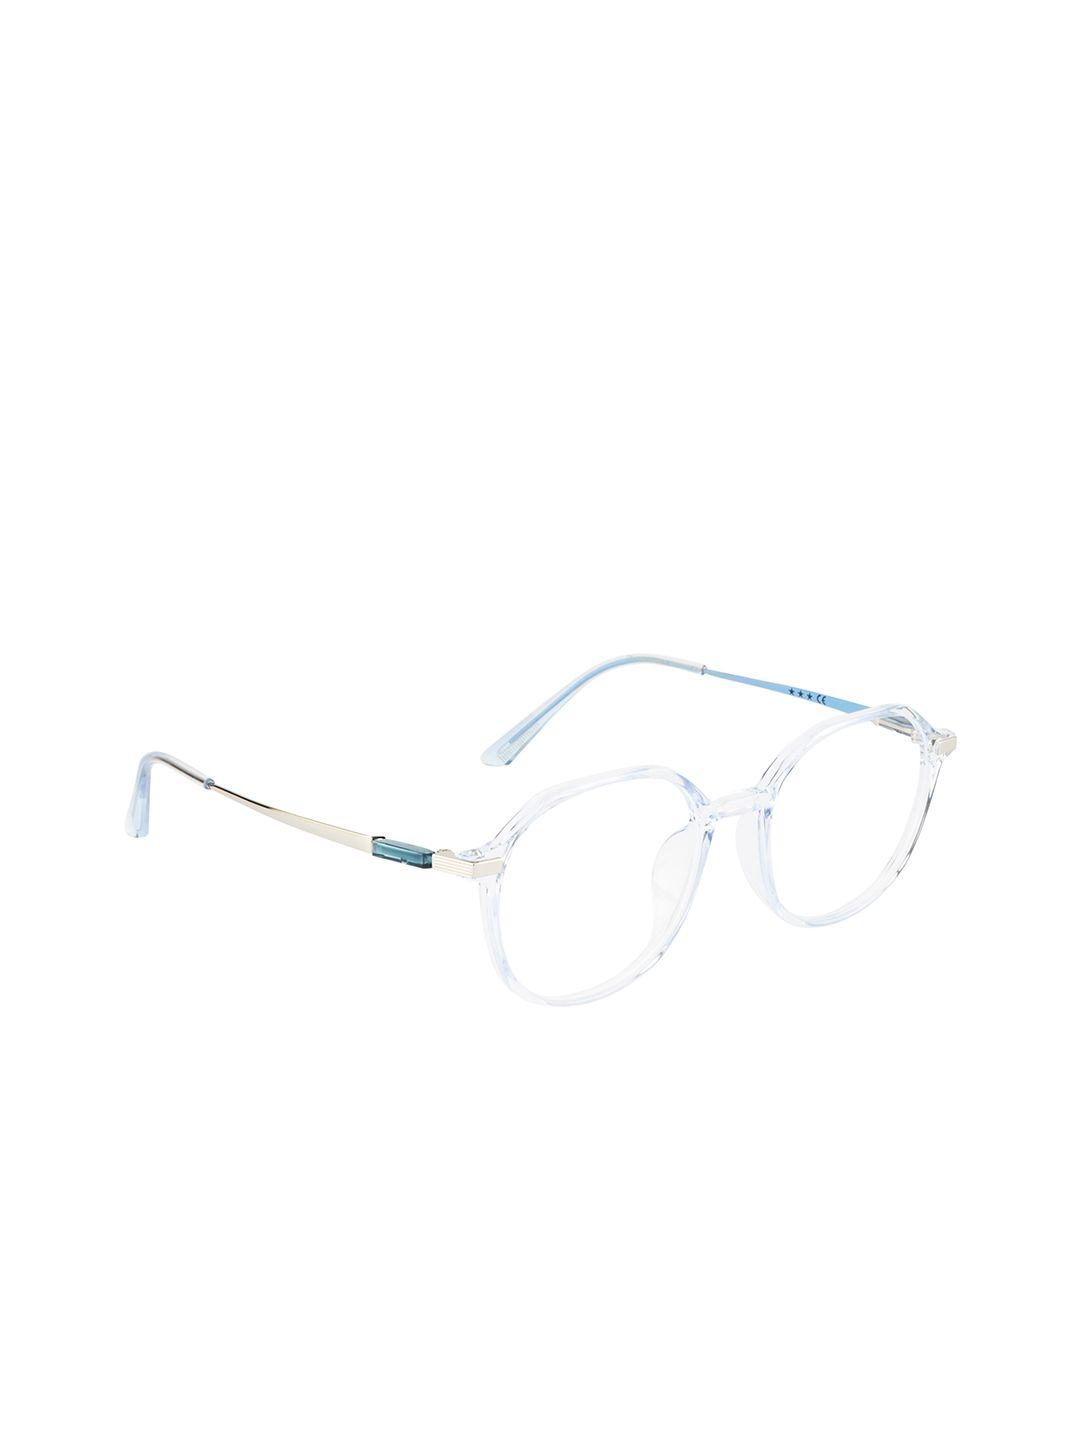 ted smith unisex blue & silver-toned full rim oval frames eyeglasses